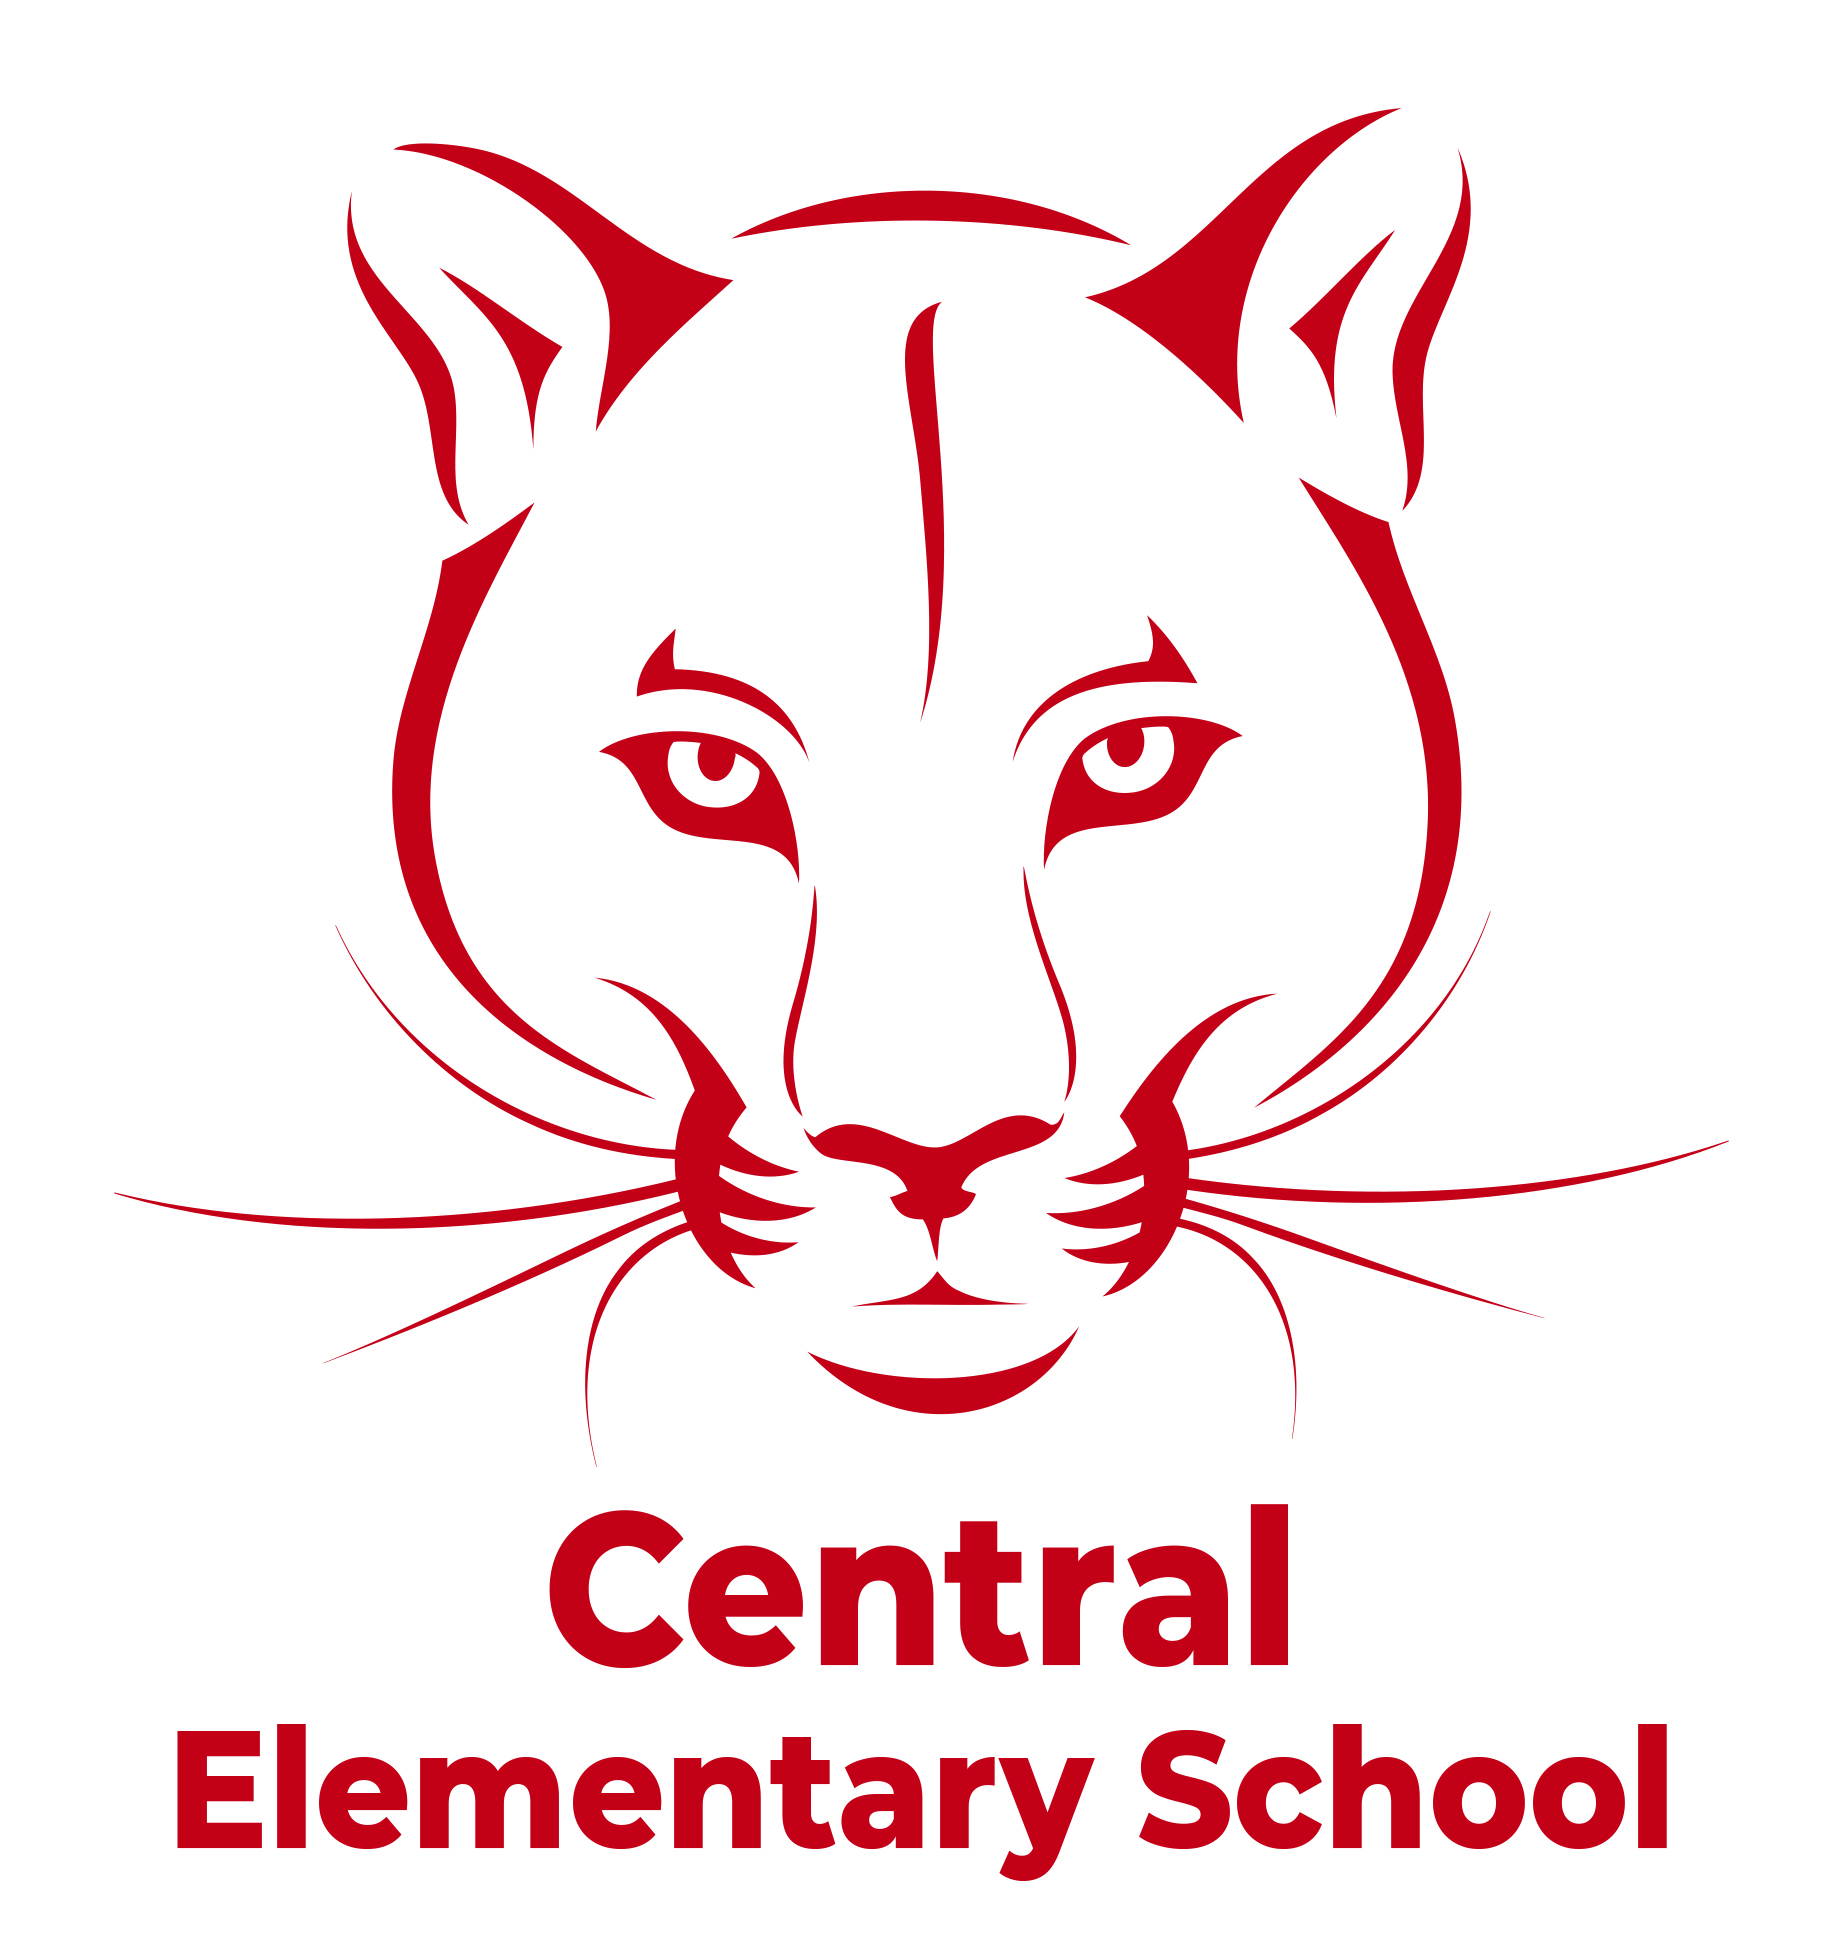 Central Elementary School Cougar logo